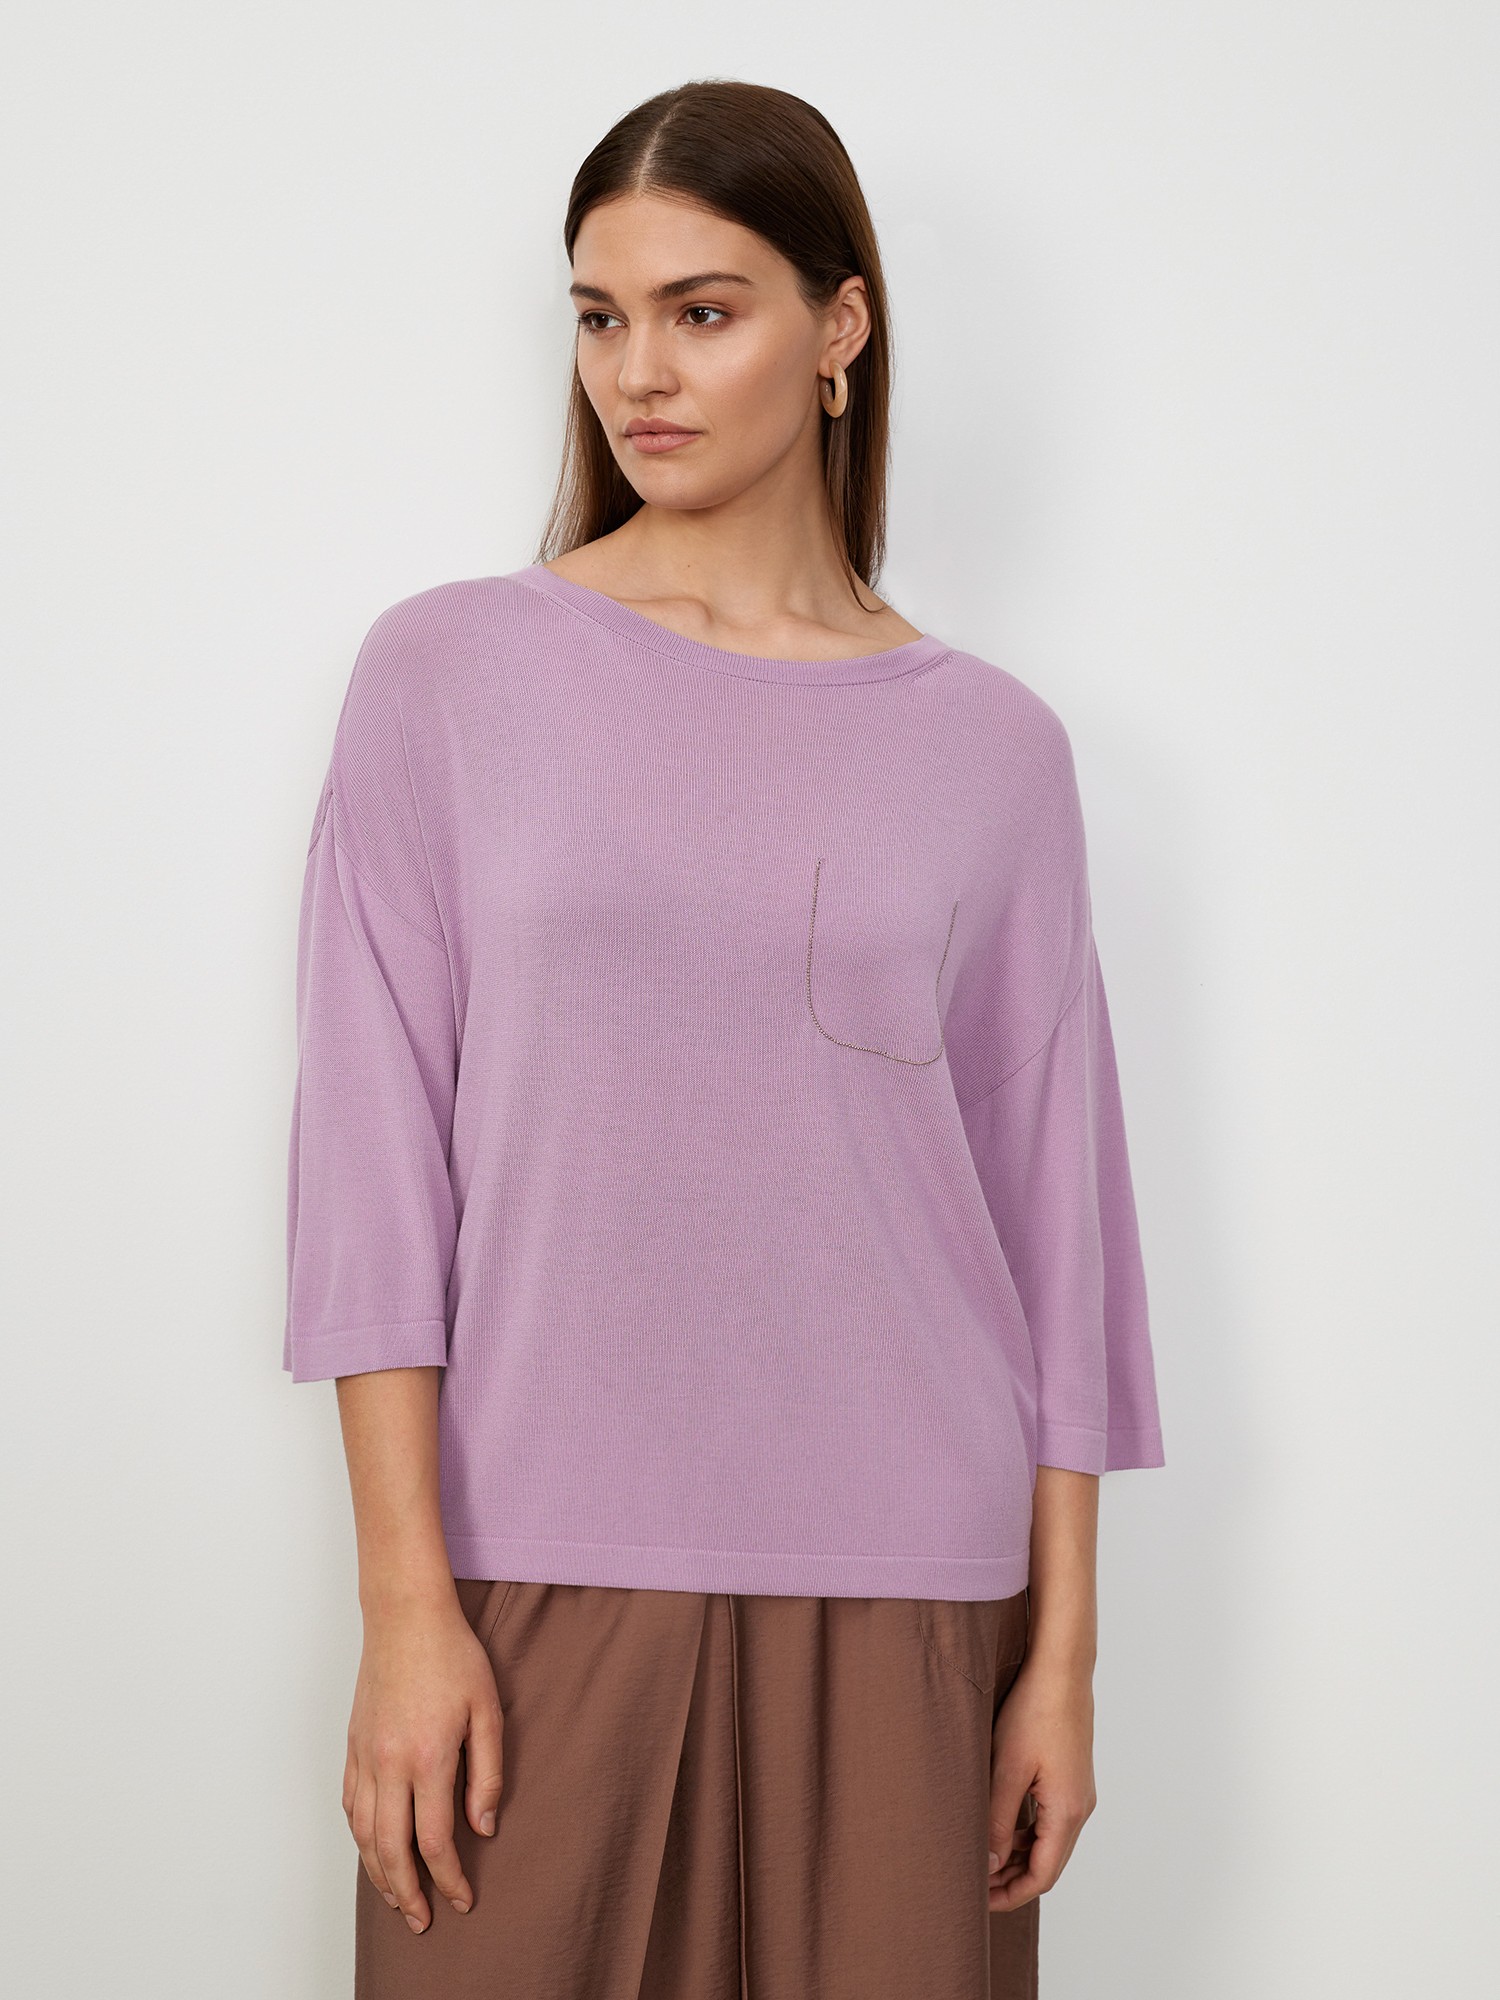 Блуза вязаная с монилью Lalis BL1069V, цвет фиолетовый, размер 52 - фото 1